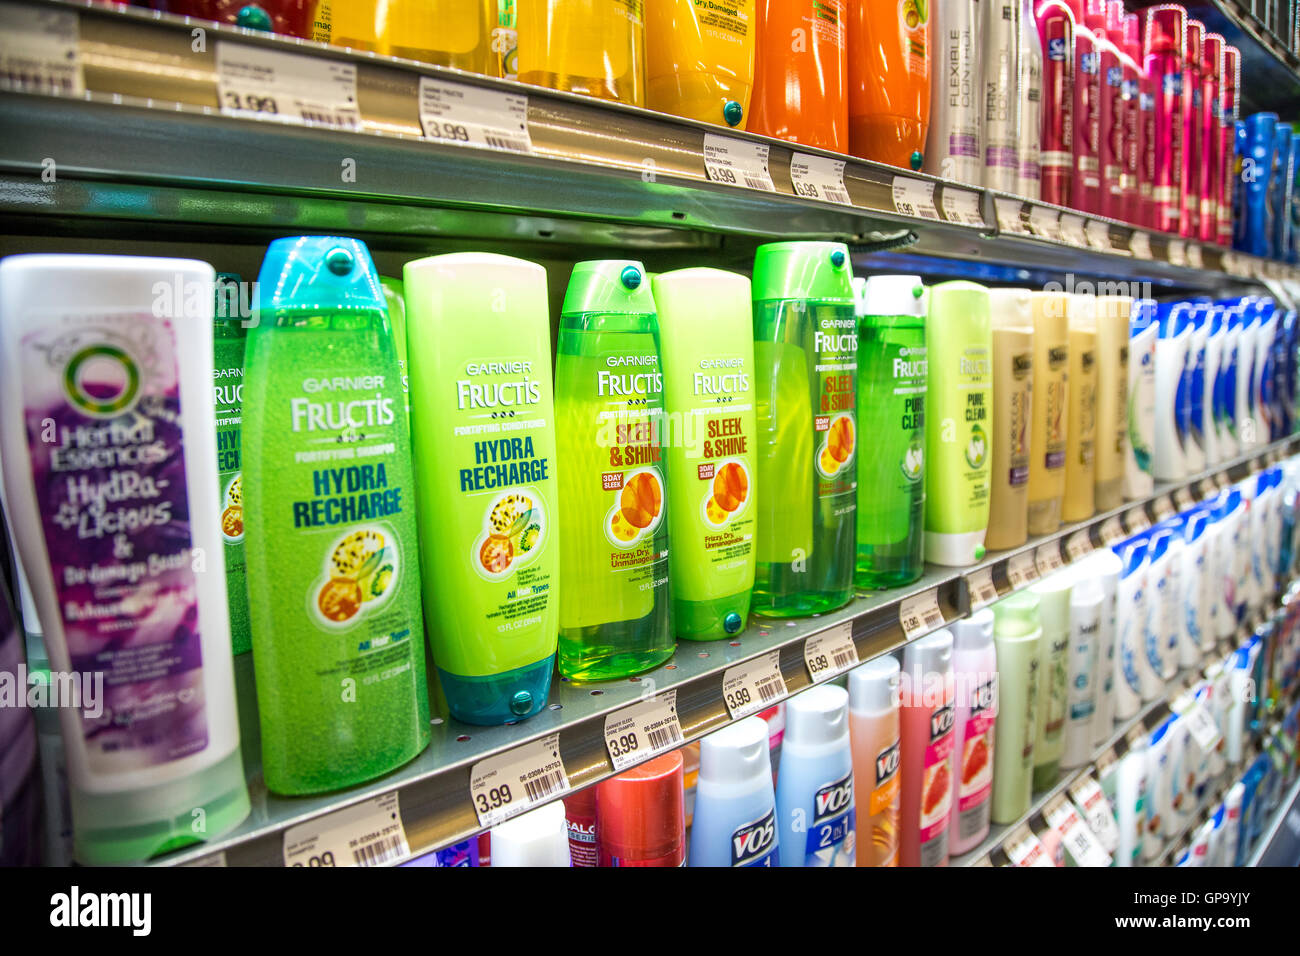 https://c8.alamy.com/comp/GP9YJY/bottles-of-garnier-shampoo-on-the-shelf-at-a-store-GP9YJY.jpg